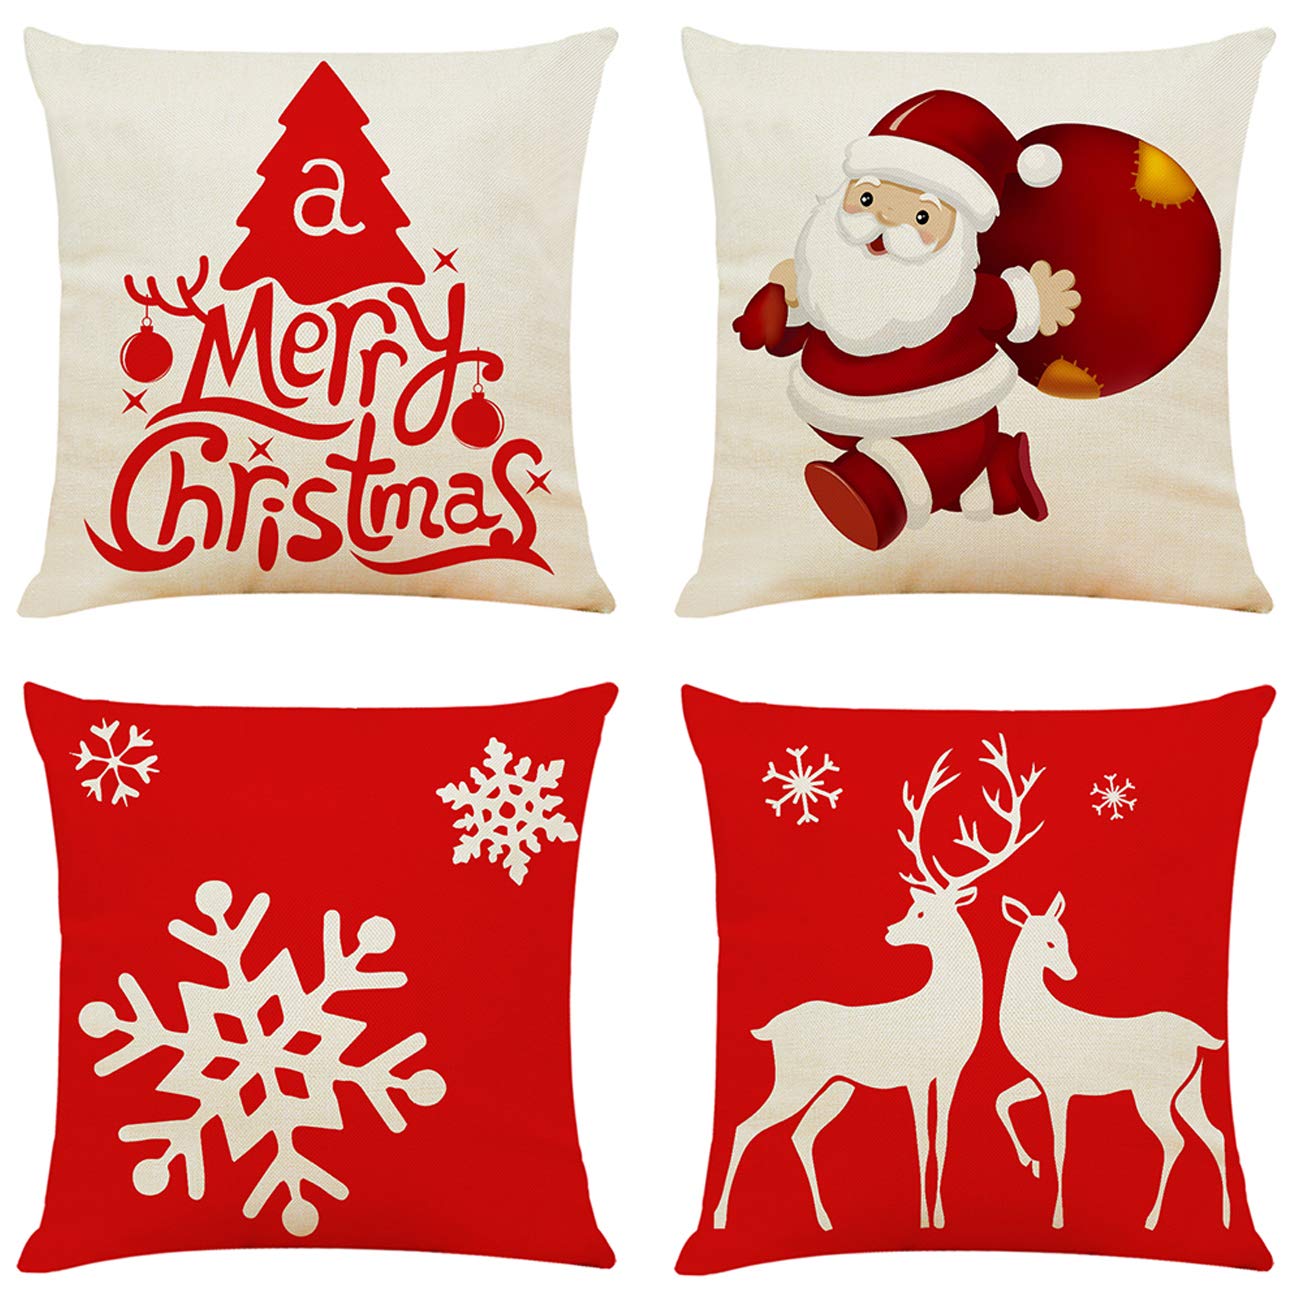 Pack of 4 18"x18" Christmas Decor Sofa Pillowcase Cotton Linen Square Cushion Cover